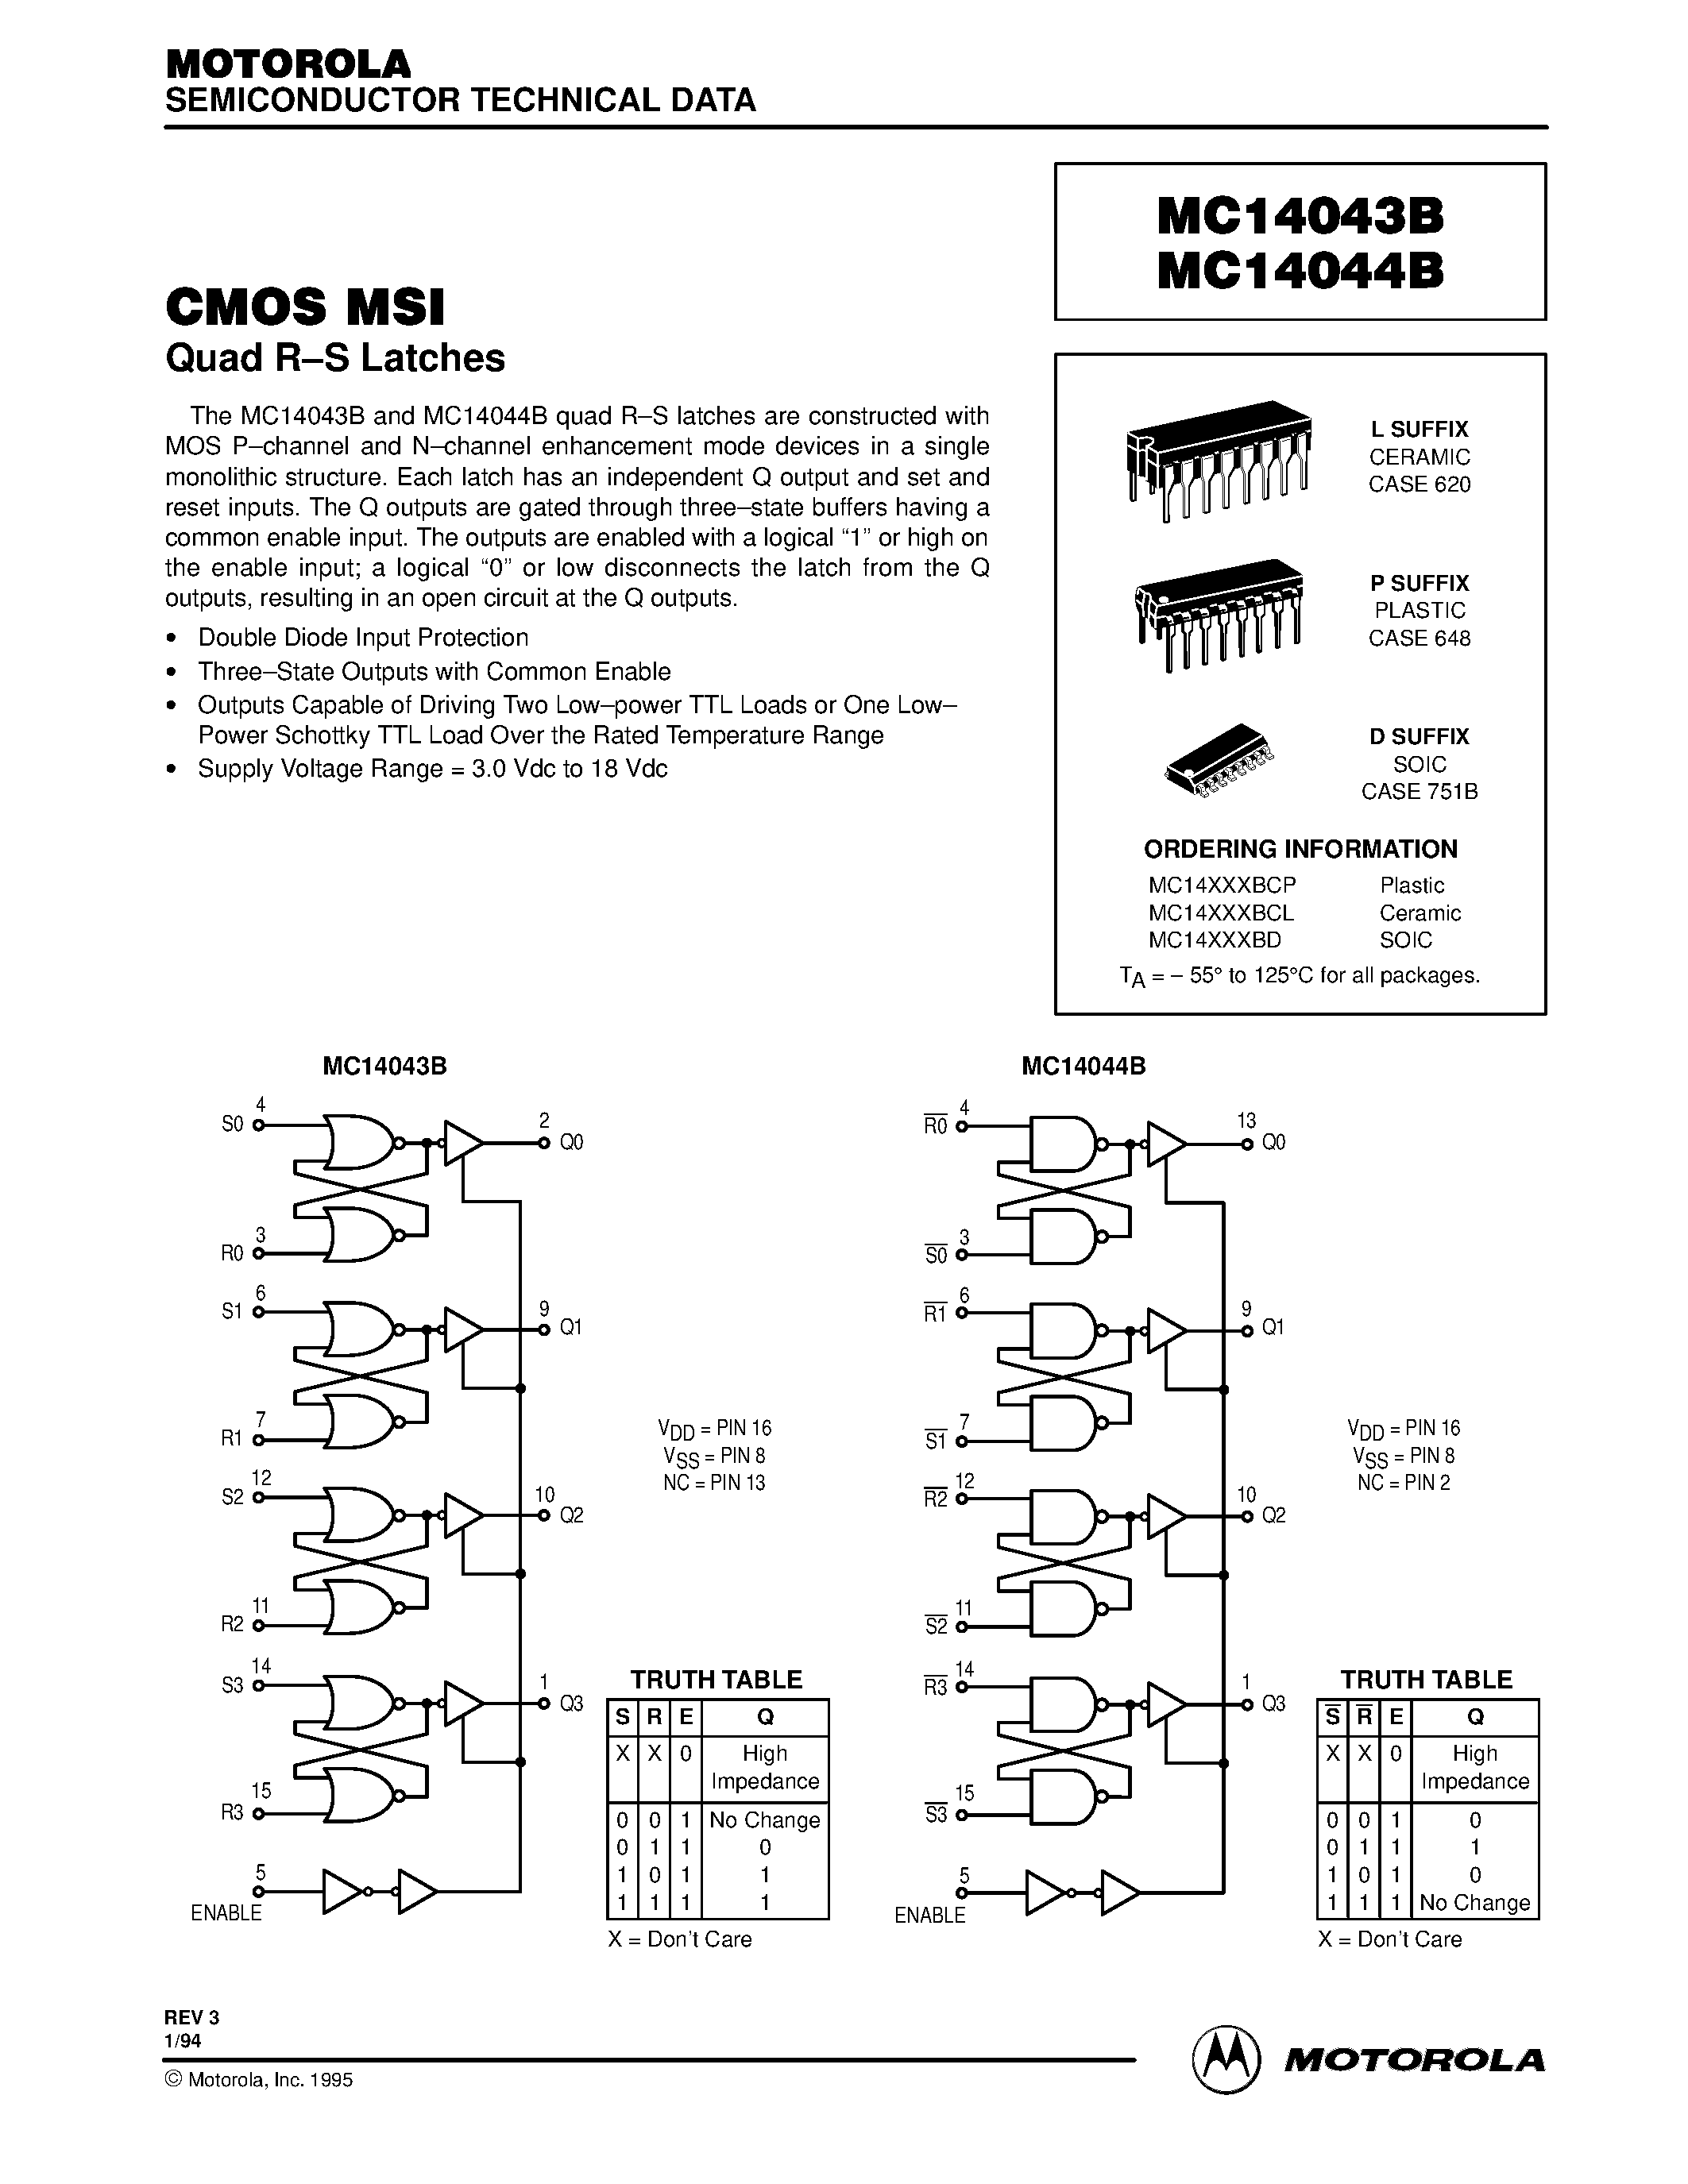 Datasheet MC14044BCL - CMOS MSI Quad R-S Latches page 1